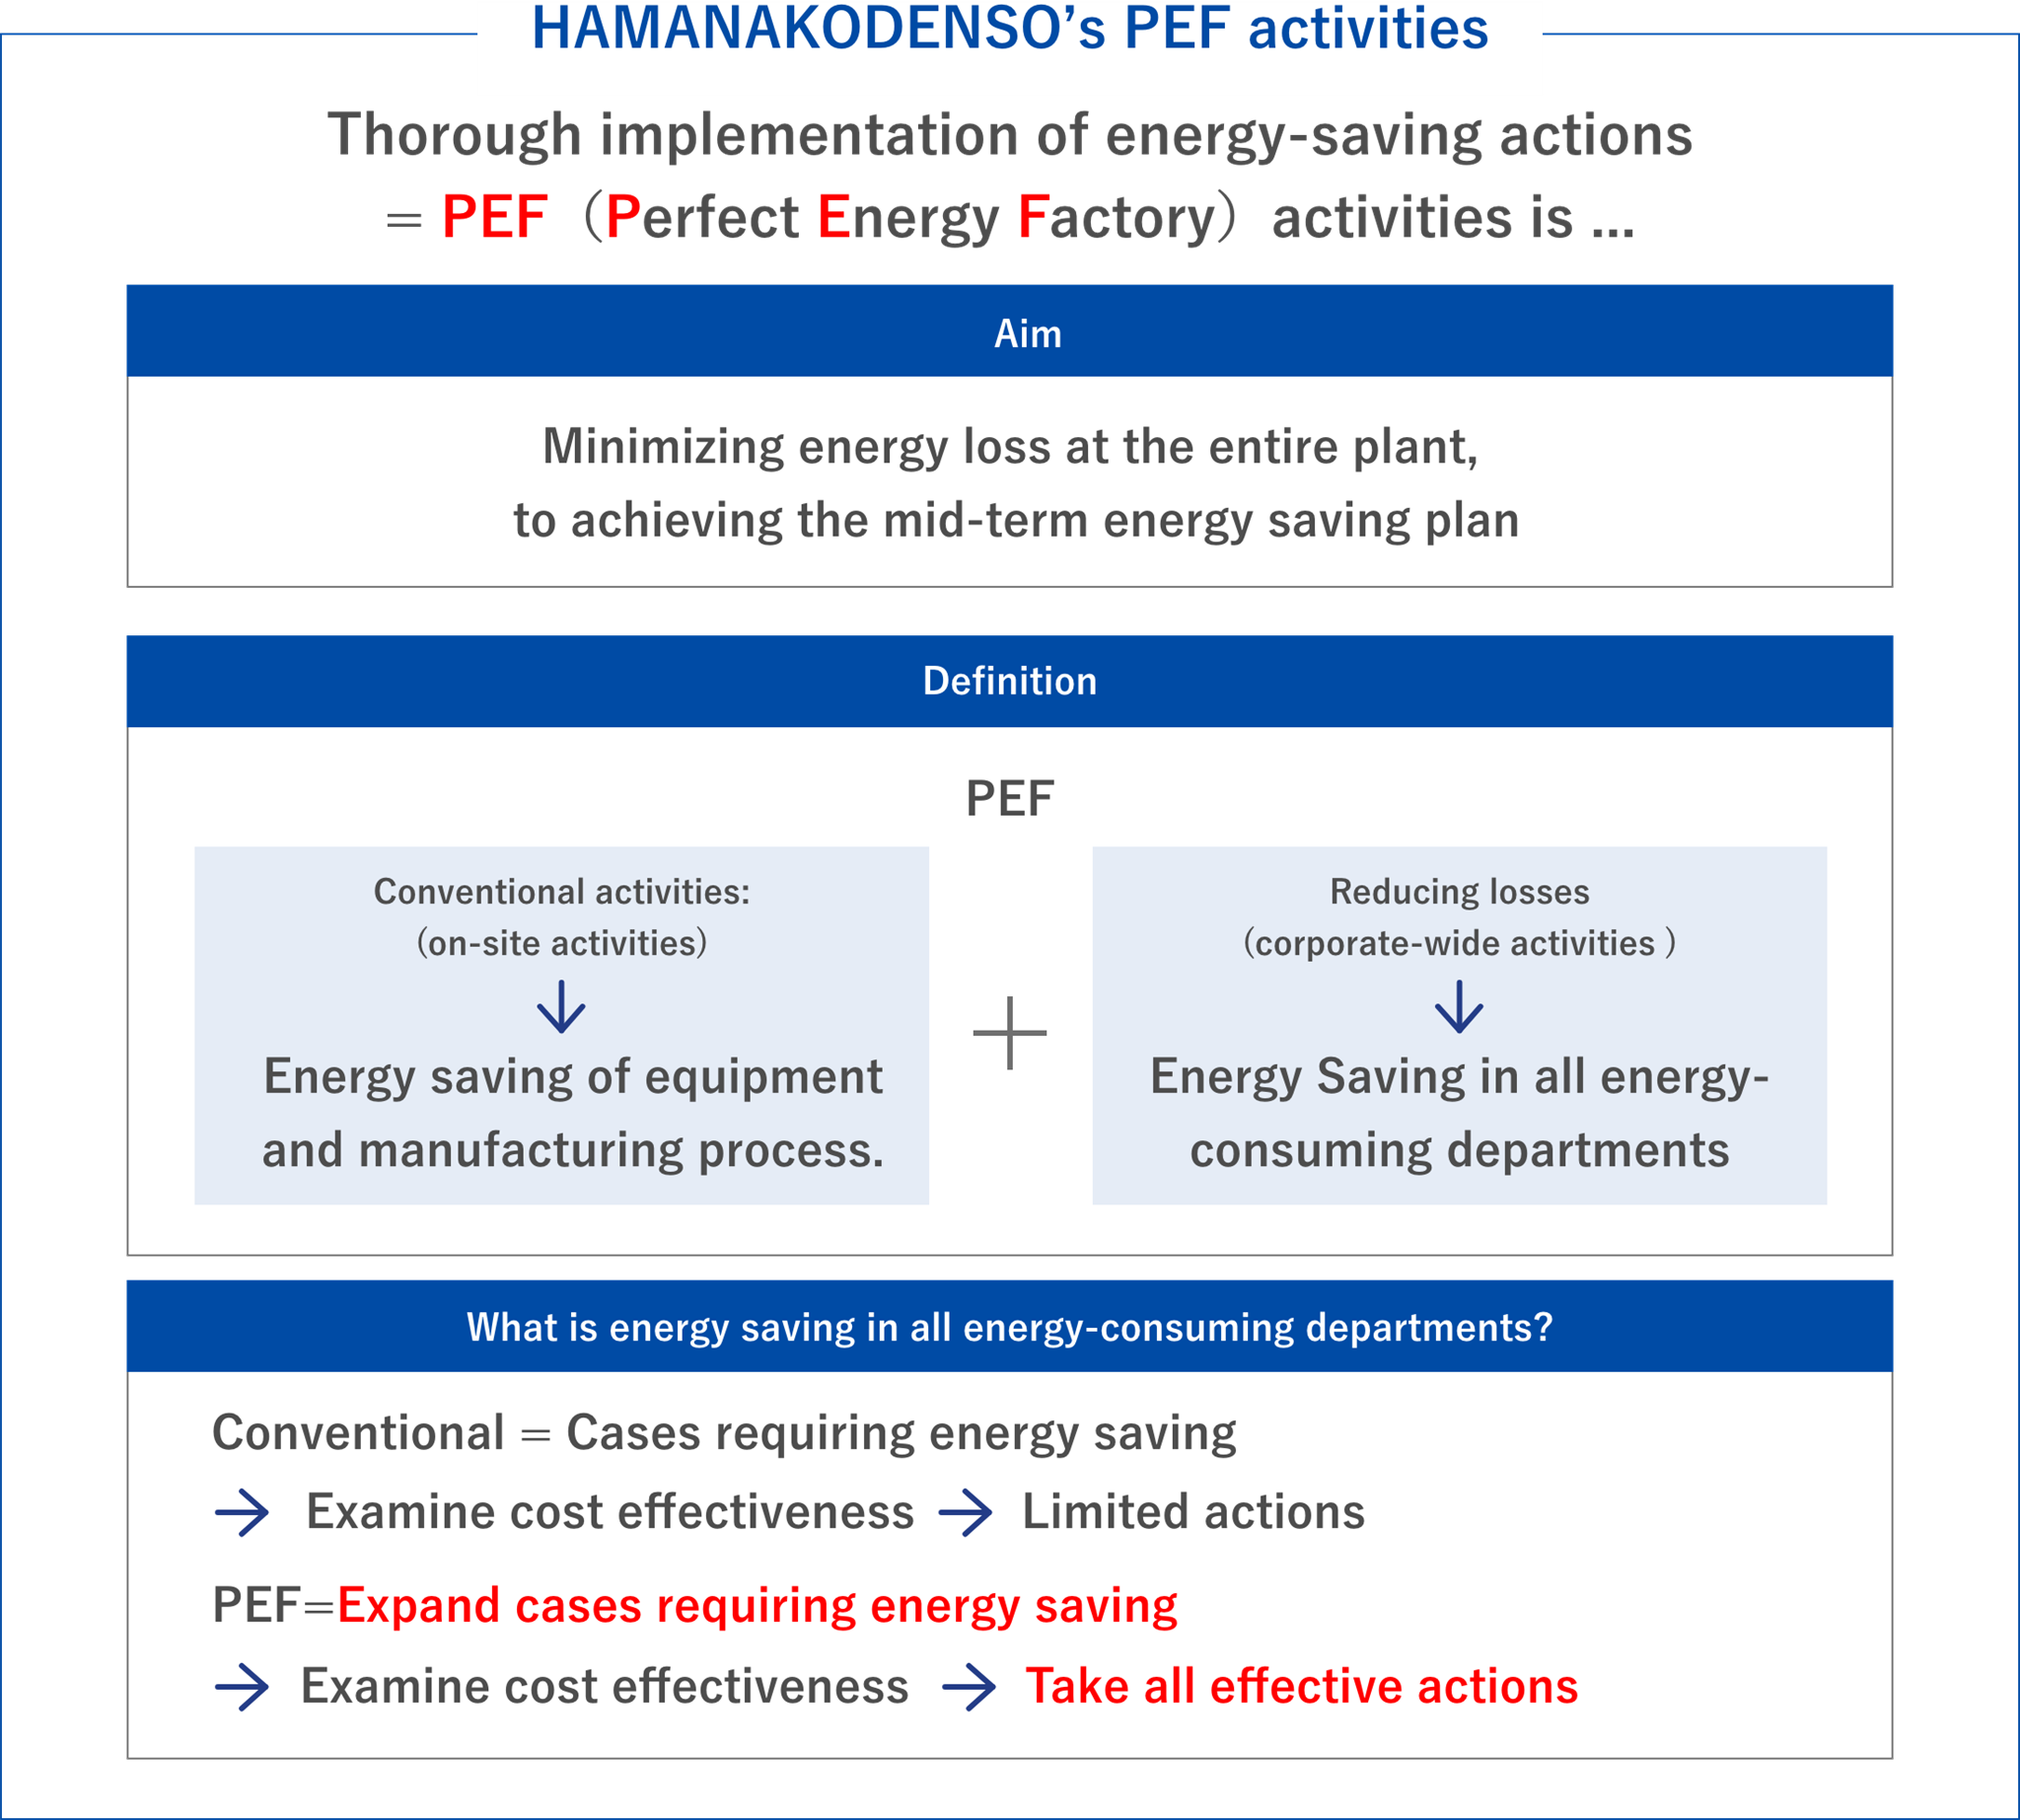 PEF Activities (company-wide energy-saving activities)